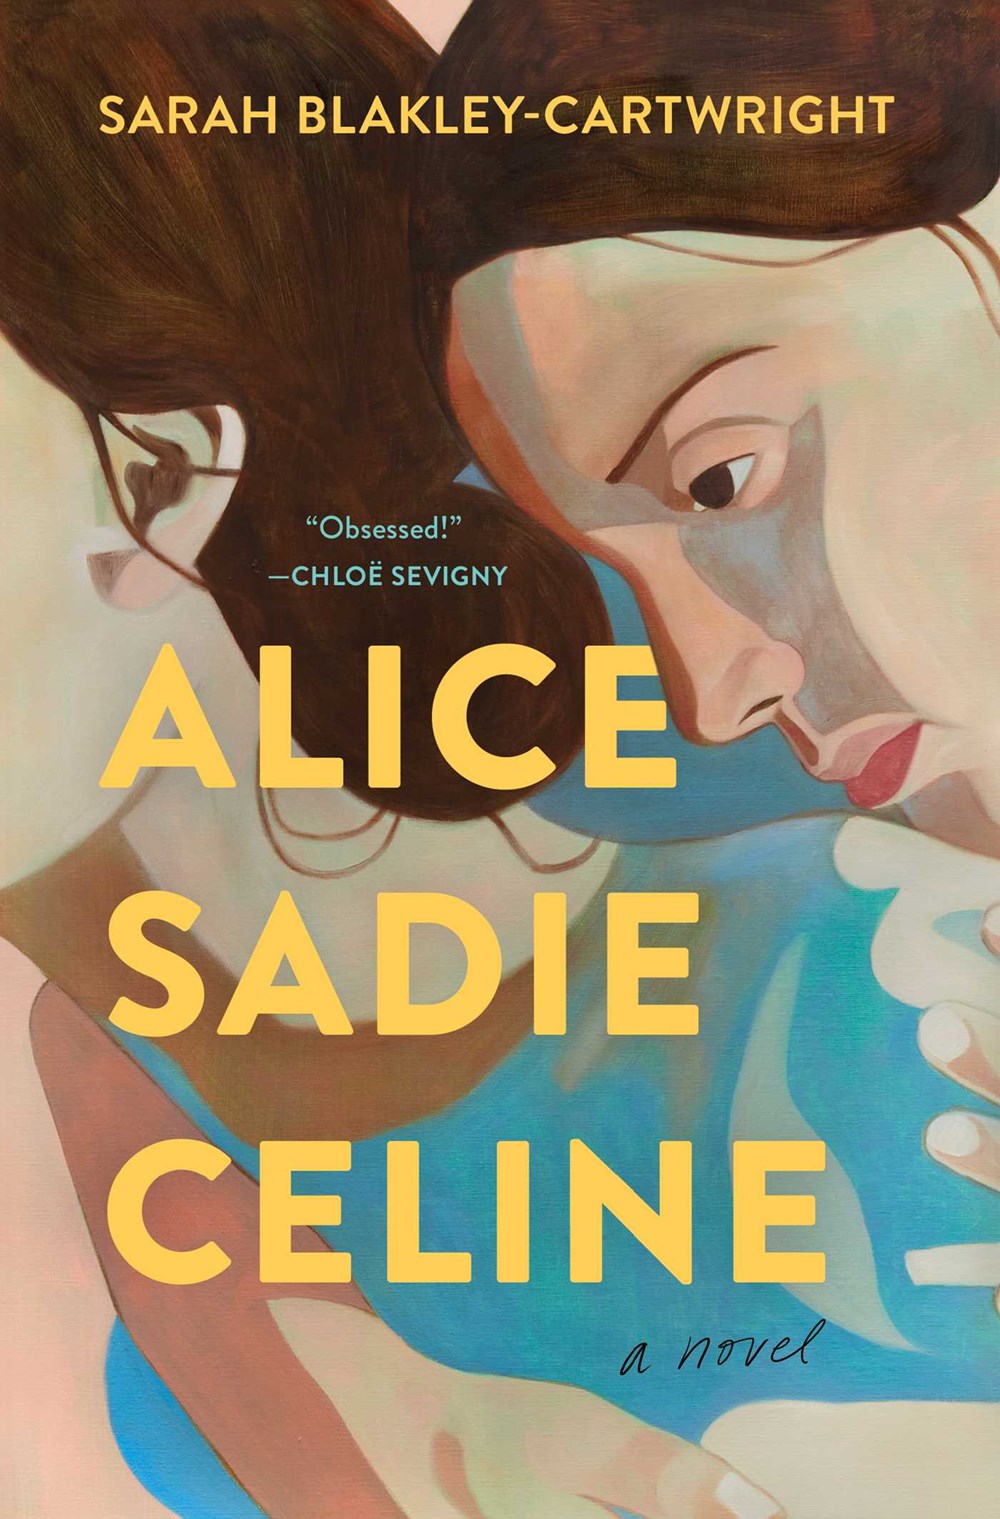 Alice Sadie Celine: A Novel by Sarah Blakley-Cartwright (11/28/23)